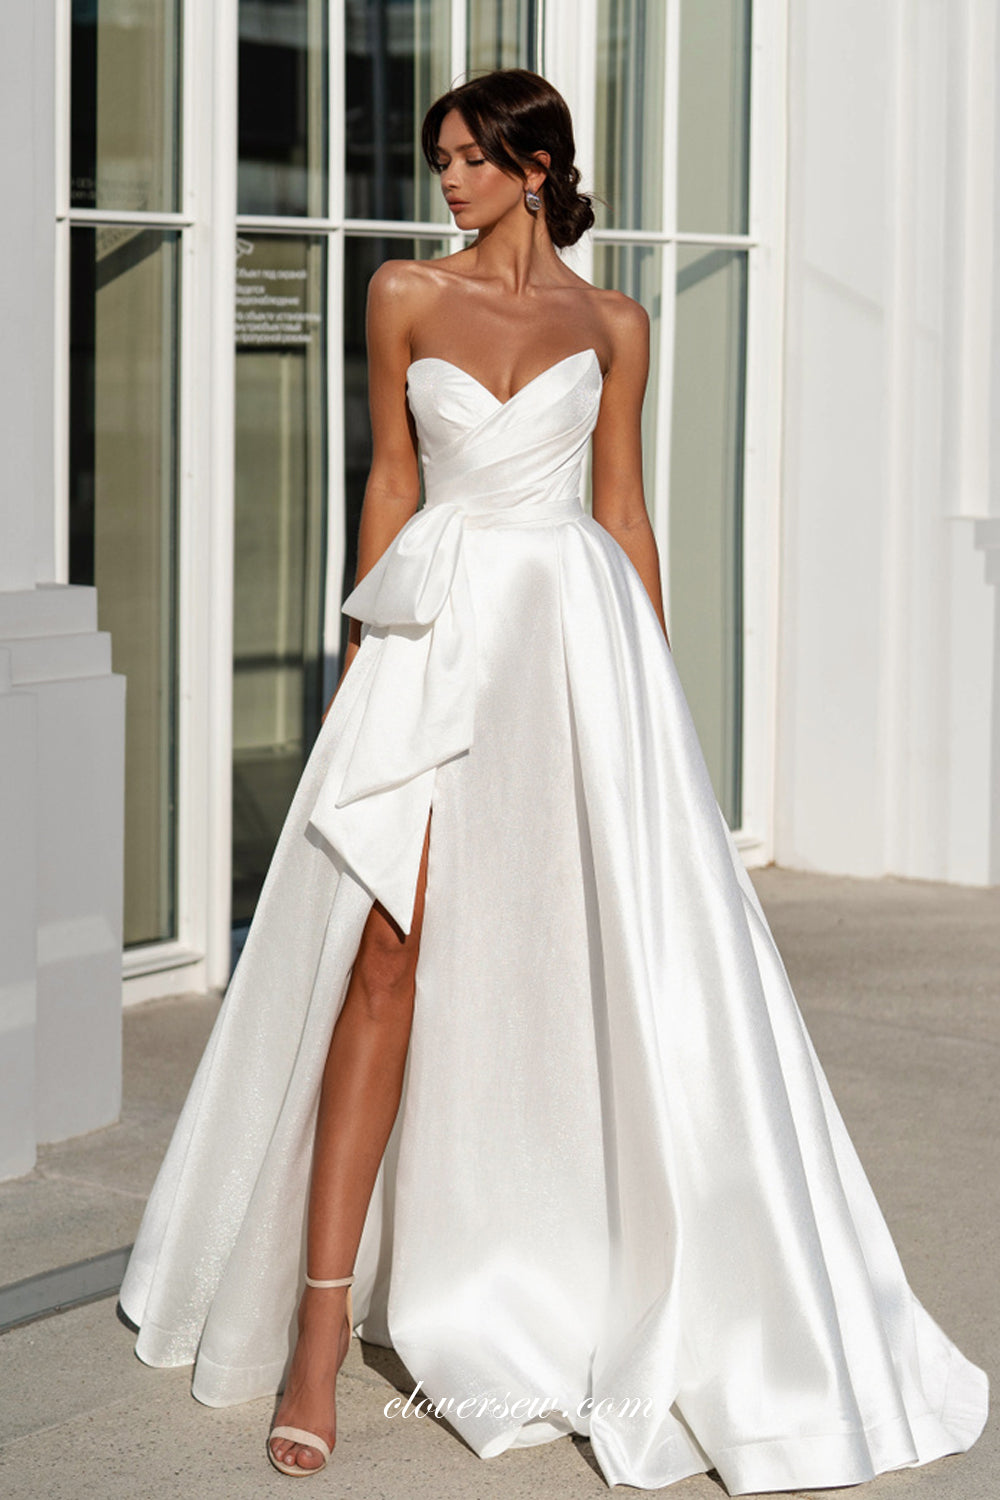 White Satin Strapless A-line Elegant Simple Wedding Dresses, CW0337 –  clover sew